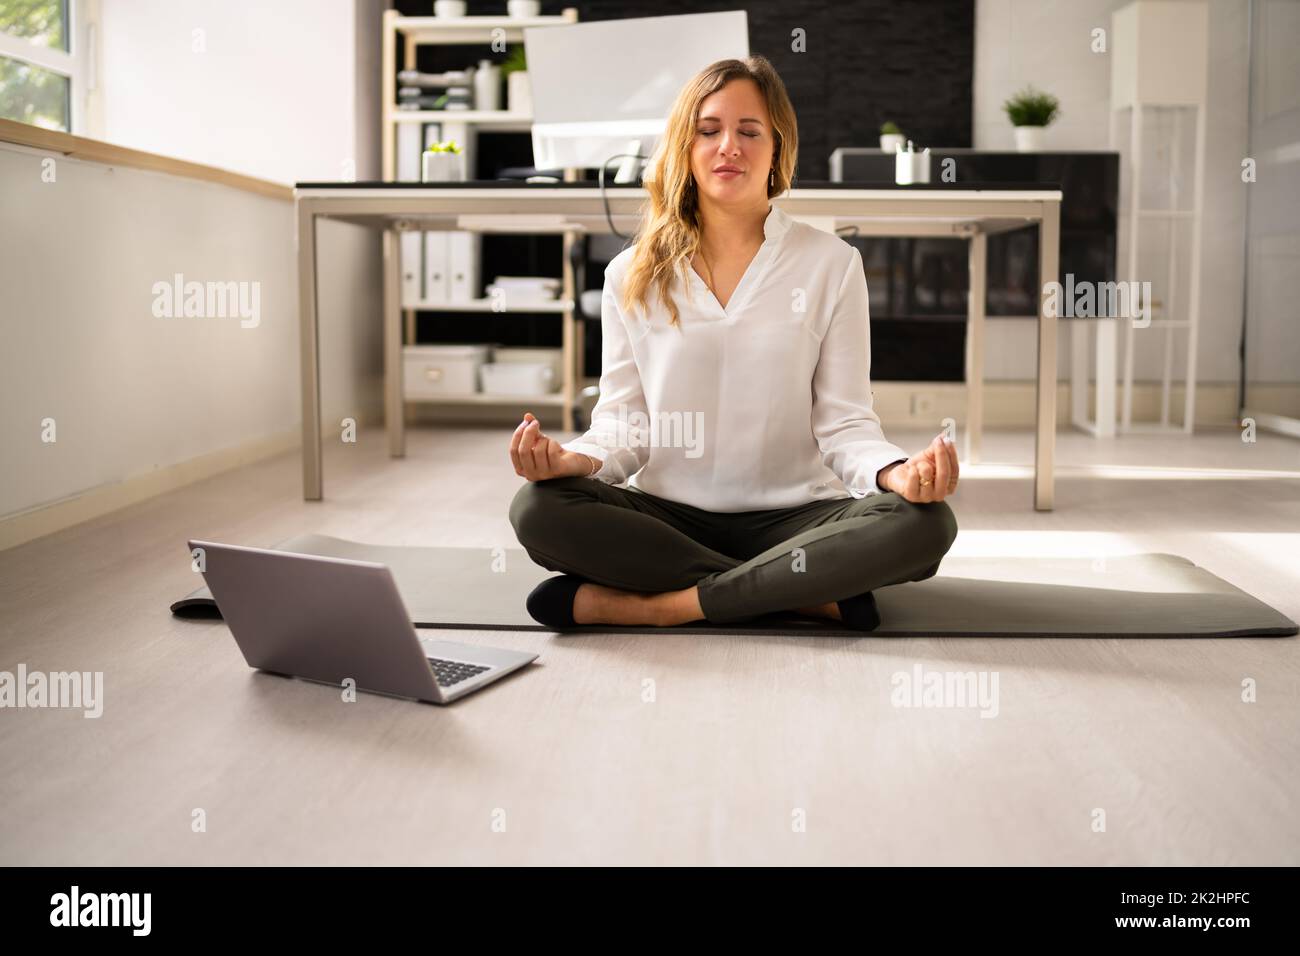 Employee Doing Mental Health Yoga Meditation In Office Stock Photo